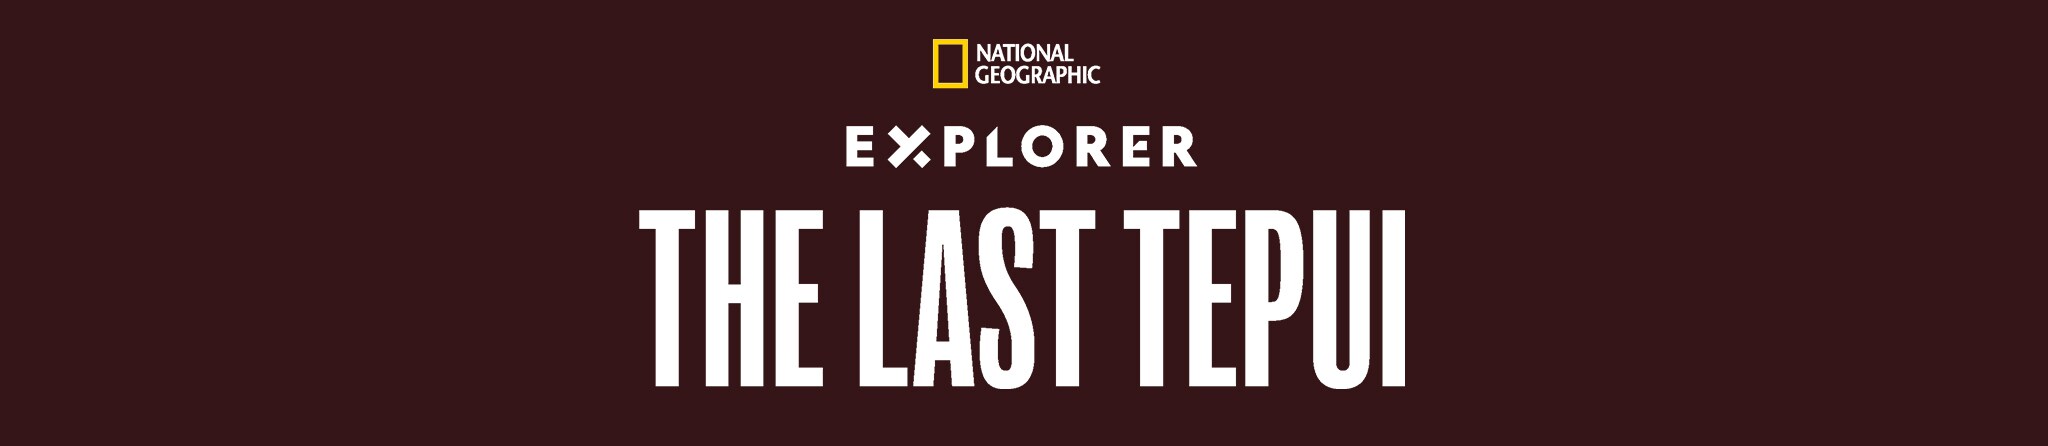 National Geographic | Explorer: The Last Tepui